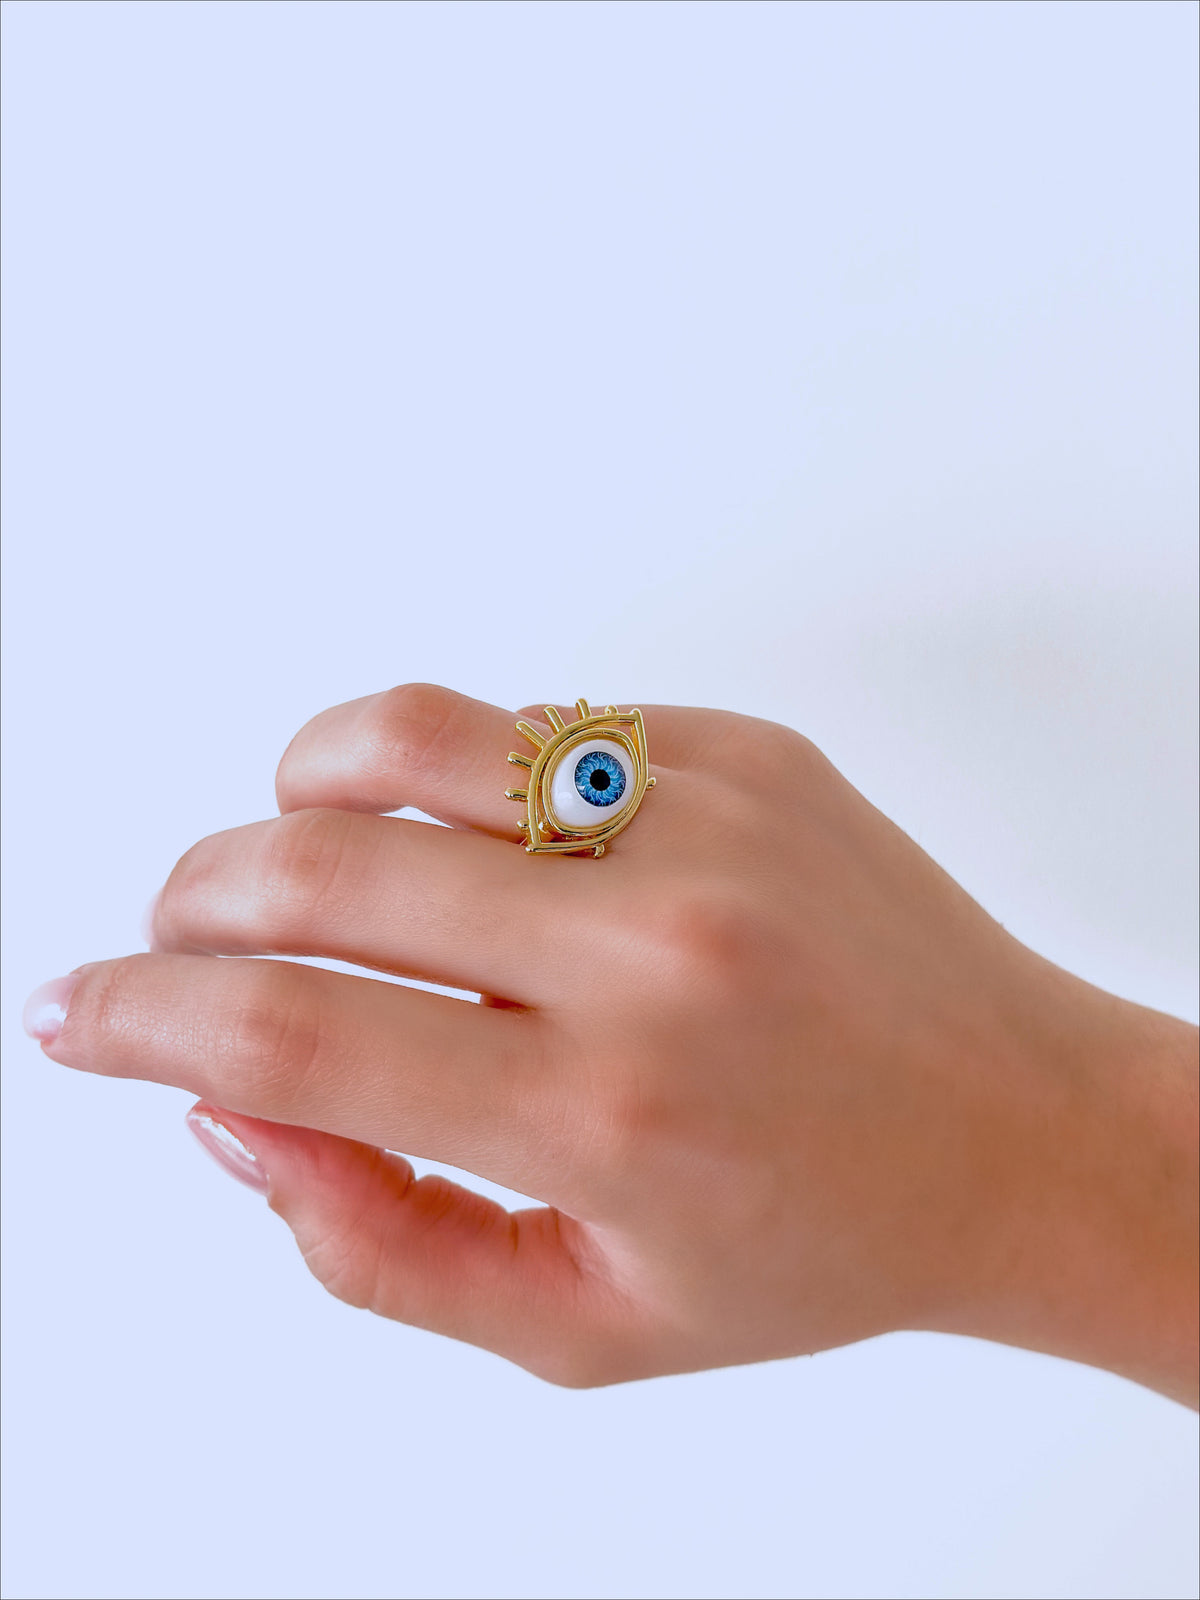 Eye of god ring